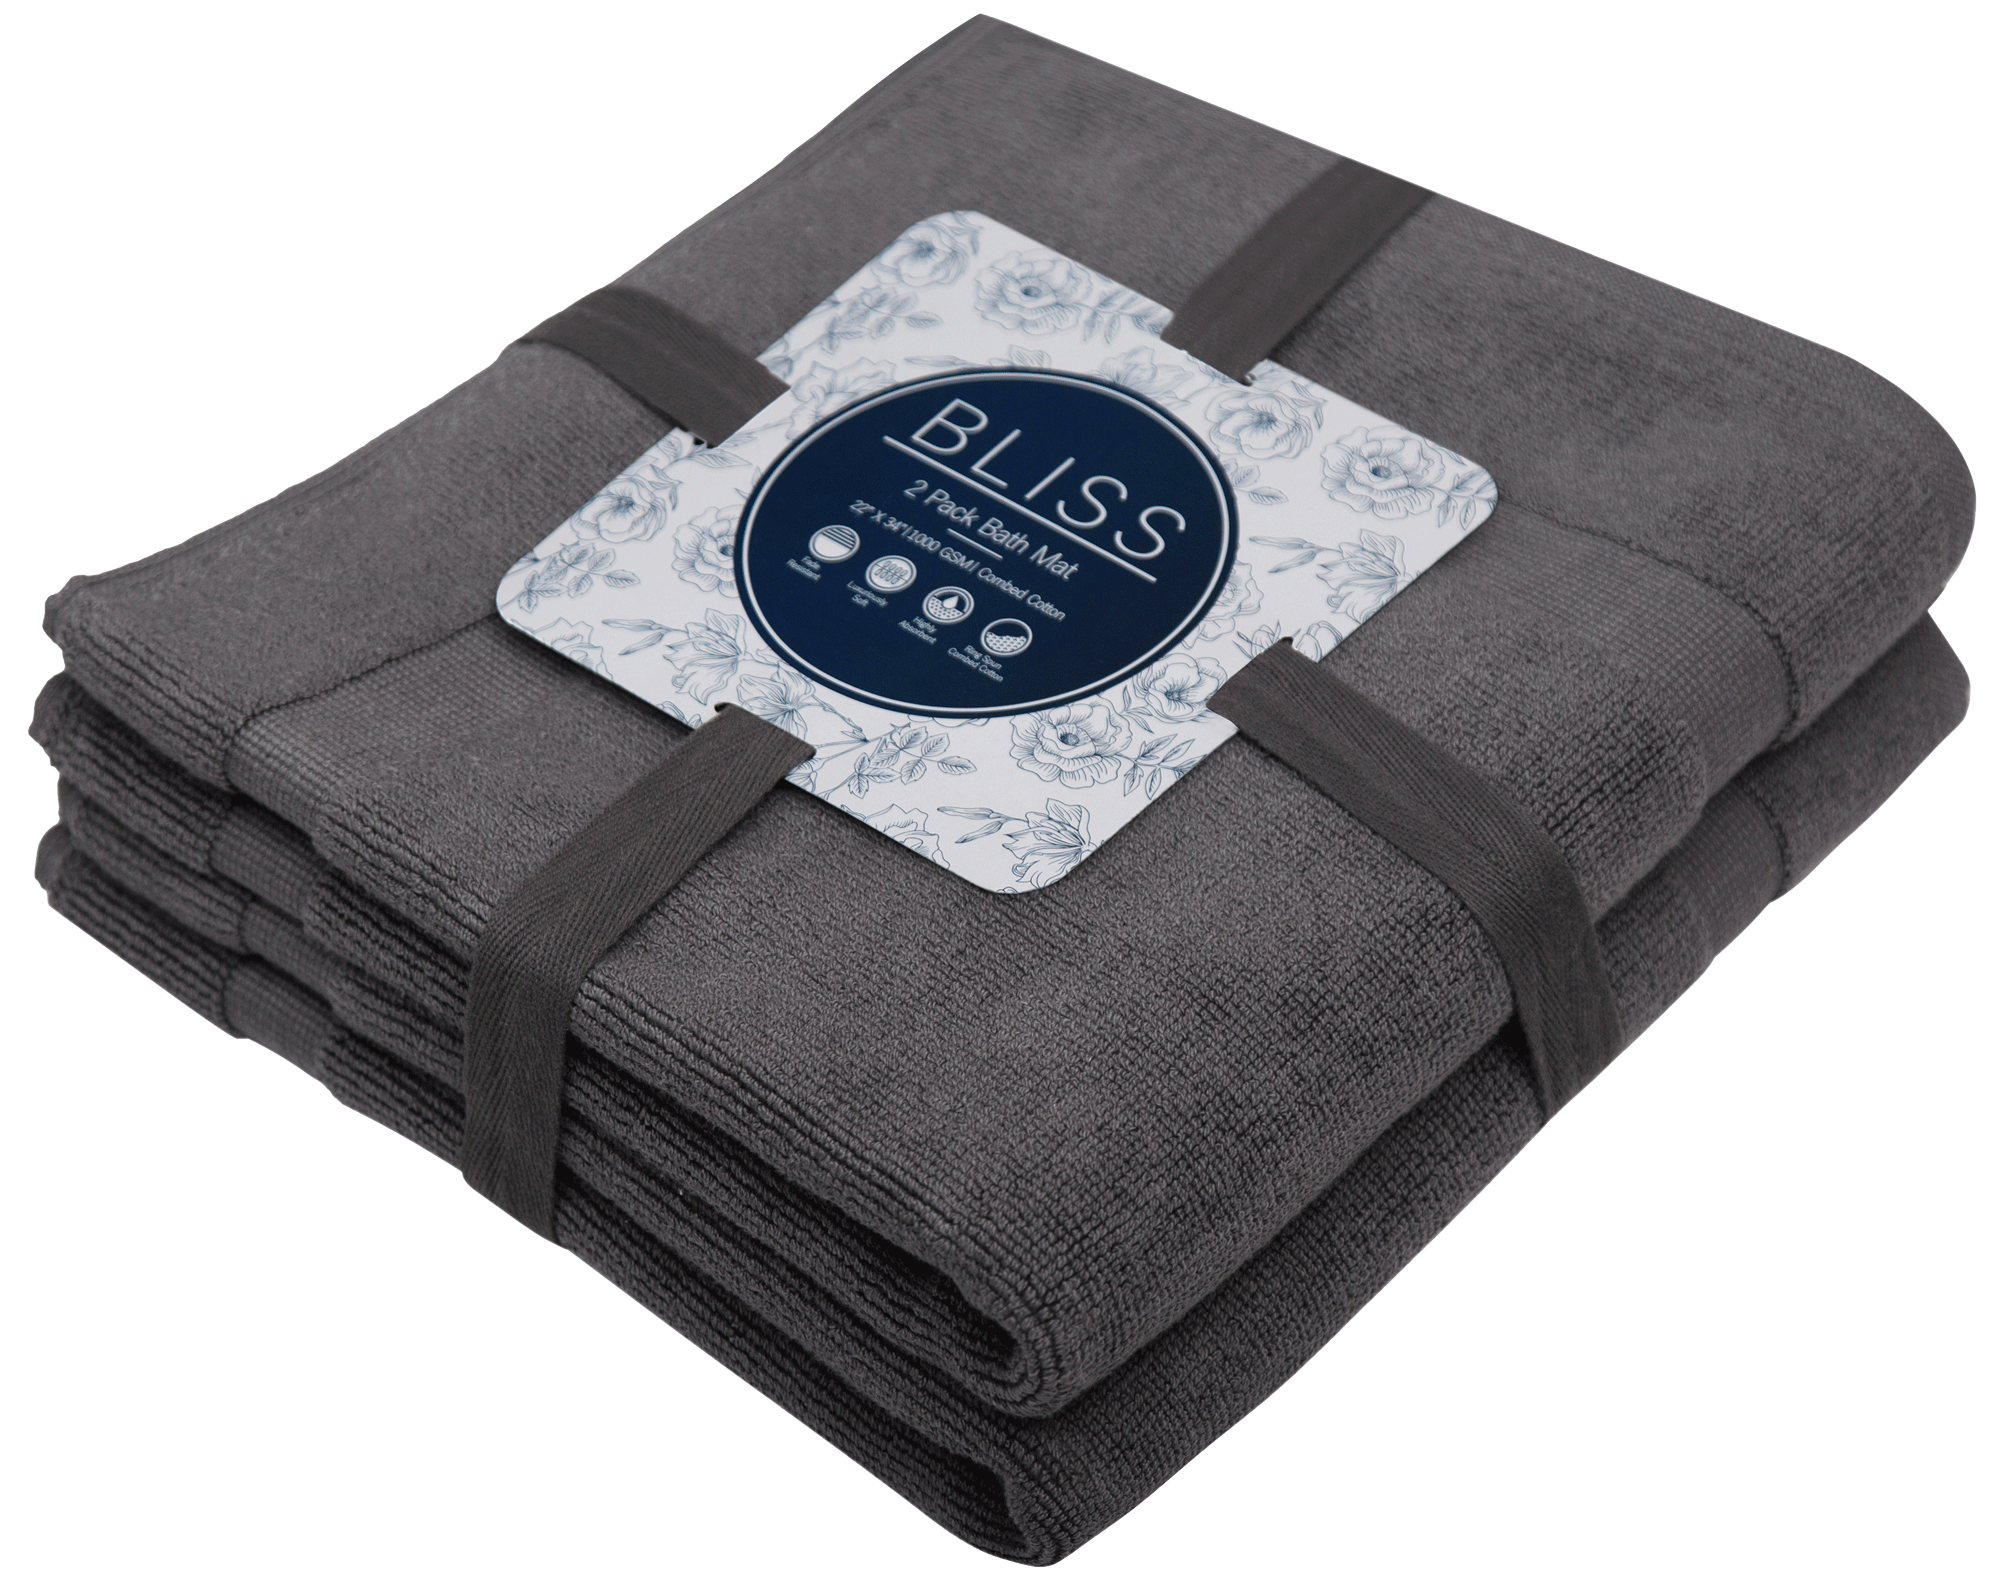 4 Pack Bath Towel Sets for Bathroom- 100% Cotton Bathroom Grey